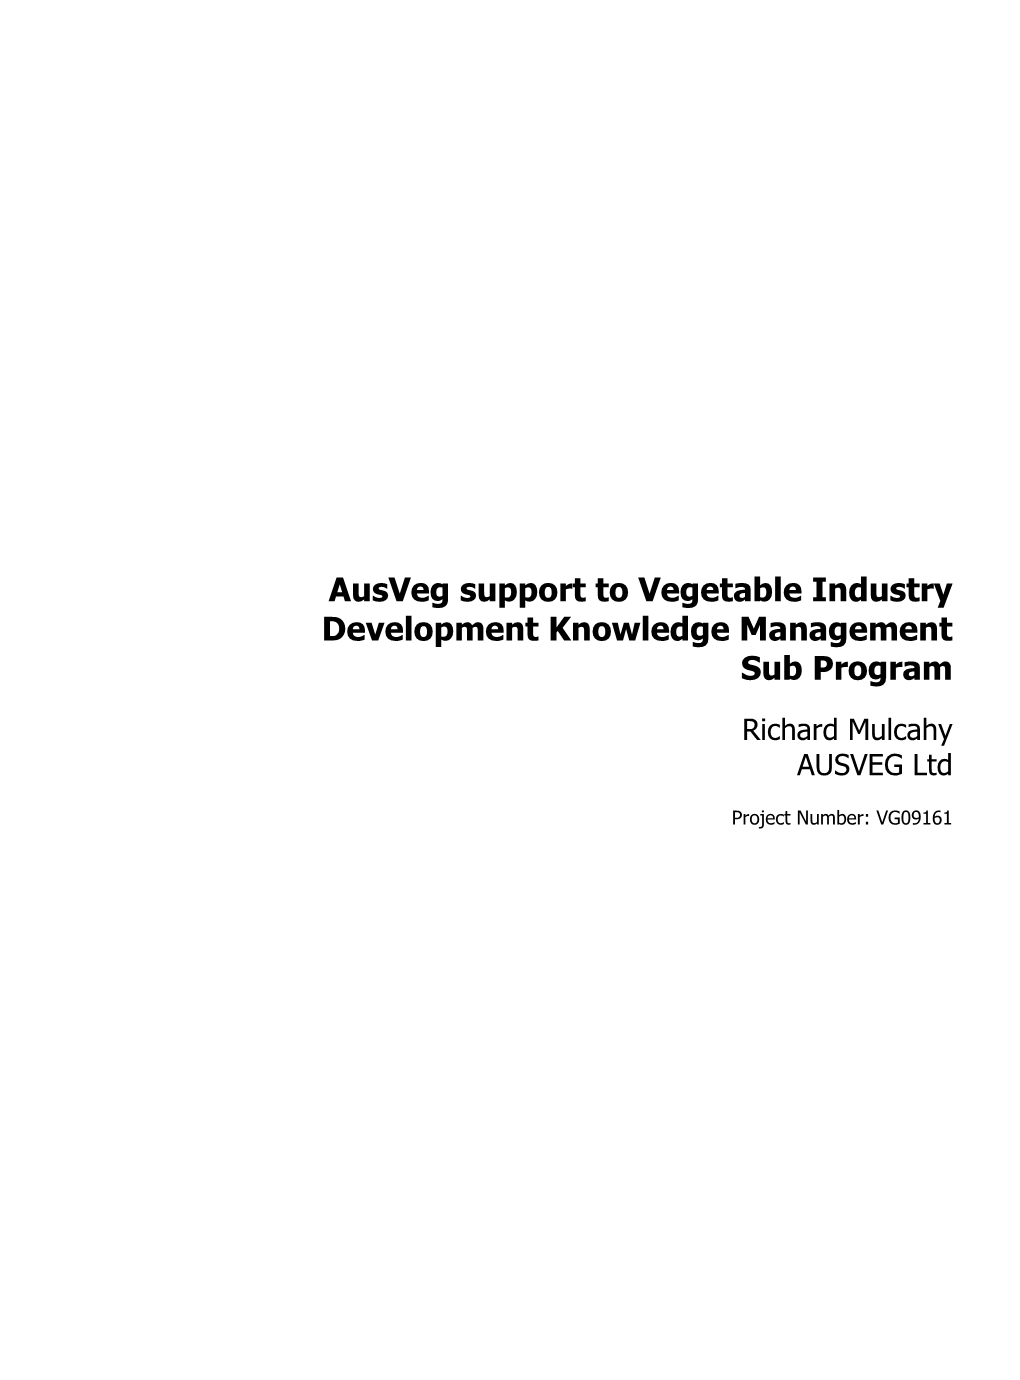 Ausveg Support to Vegetable Industry Development Knowledge Management Sub Program